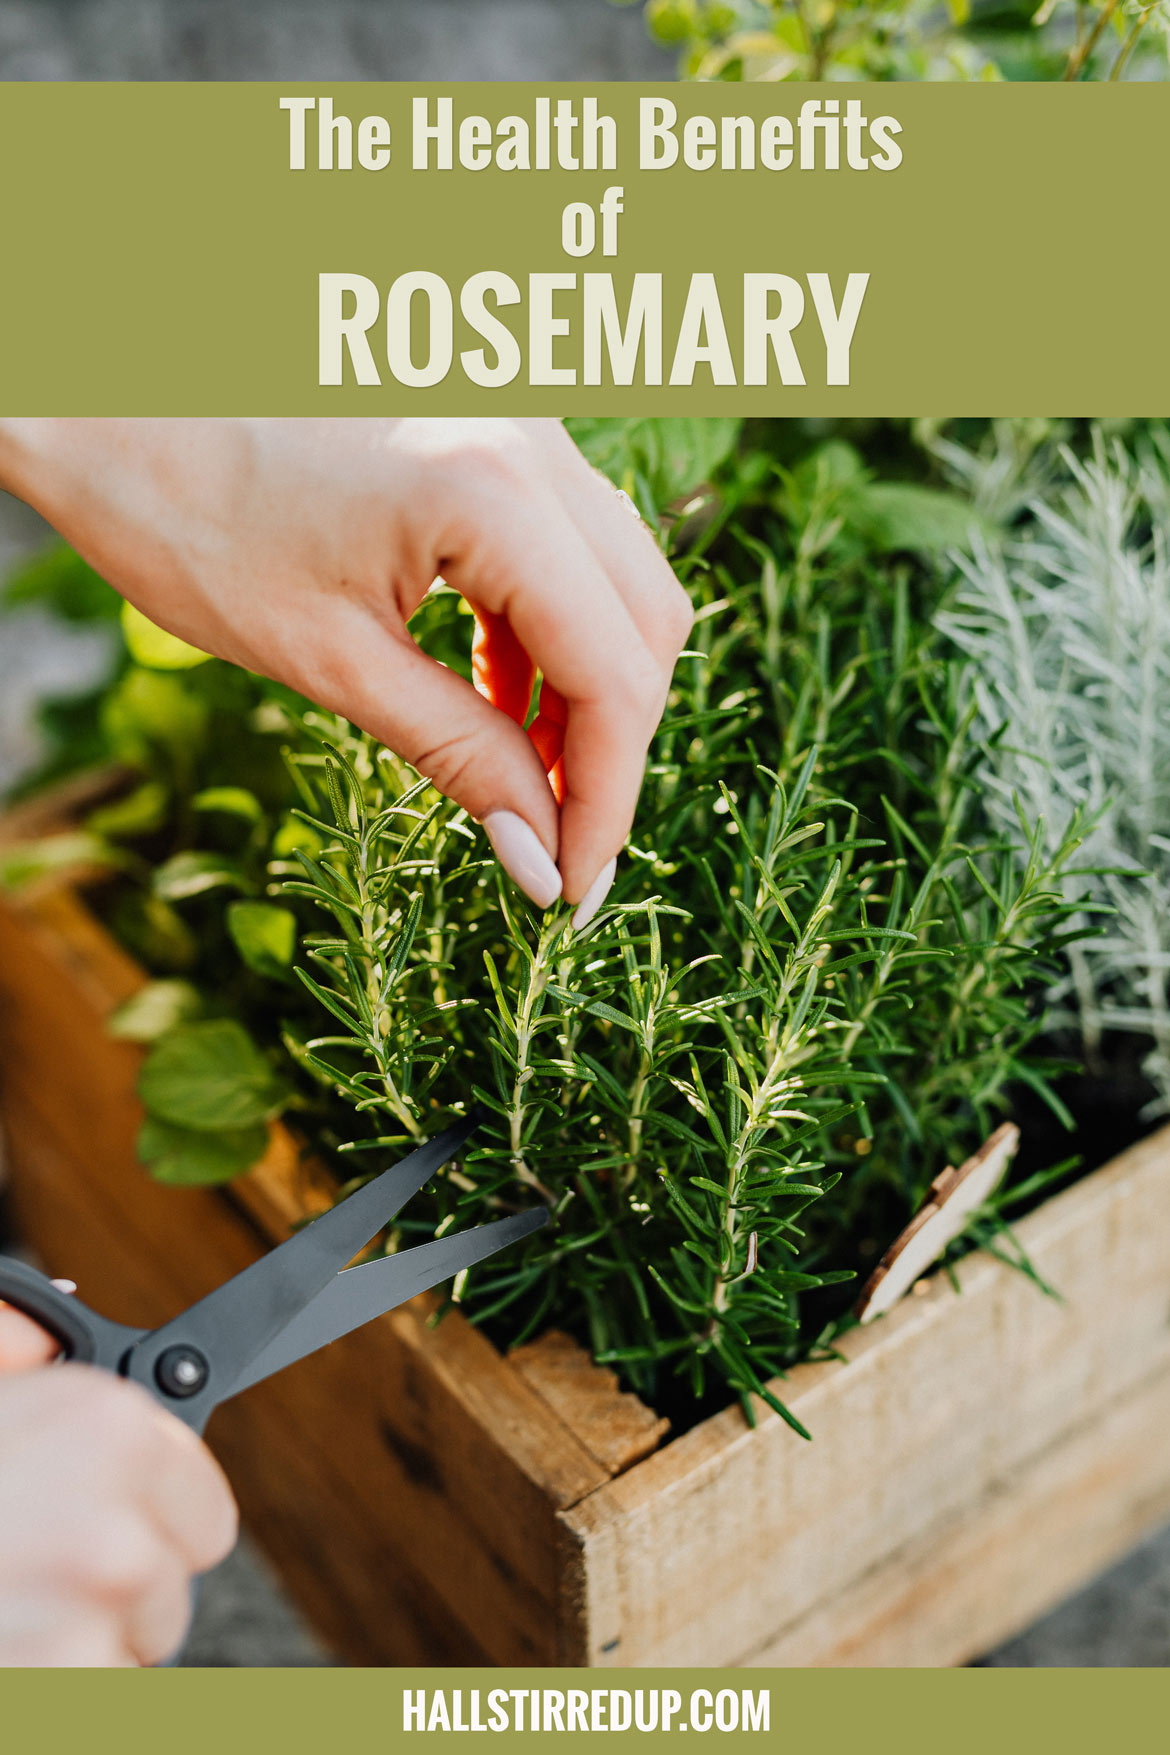 The Healing Benefits of Rosemary